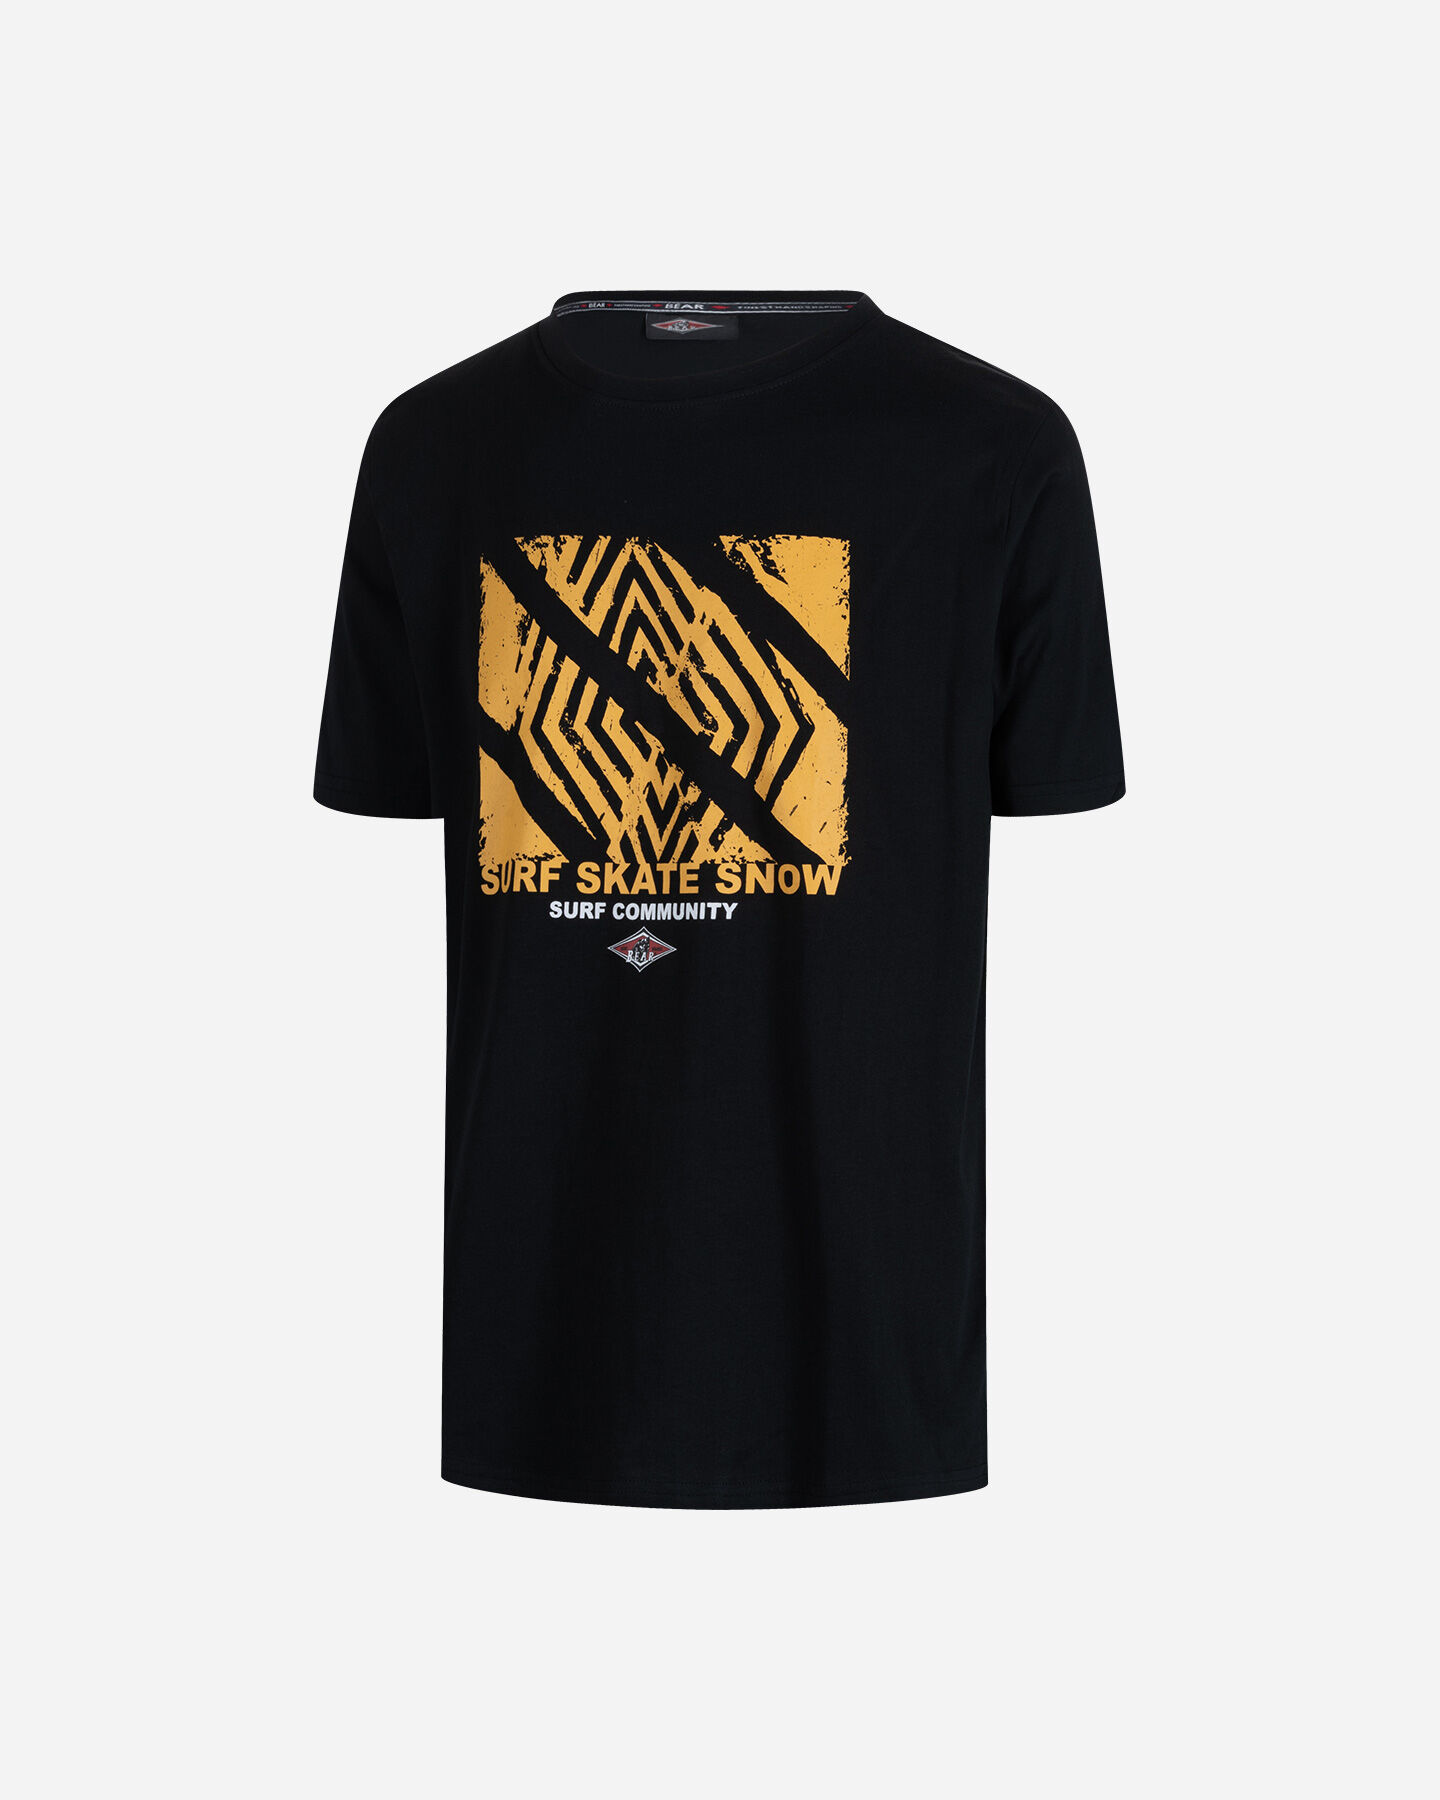  T-Shirt BEAR STREETWEAR URBAN STYLE M S4126729|050|S scatto 0